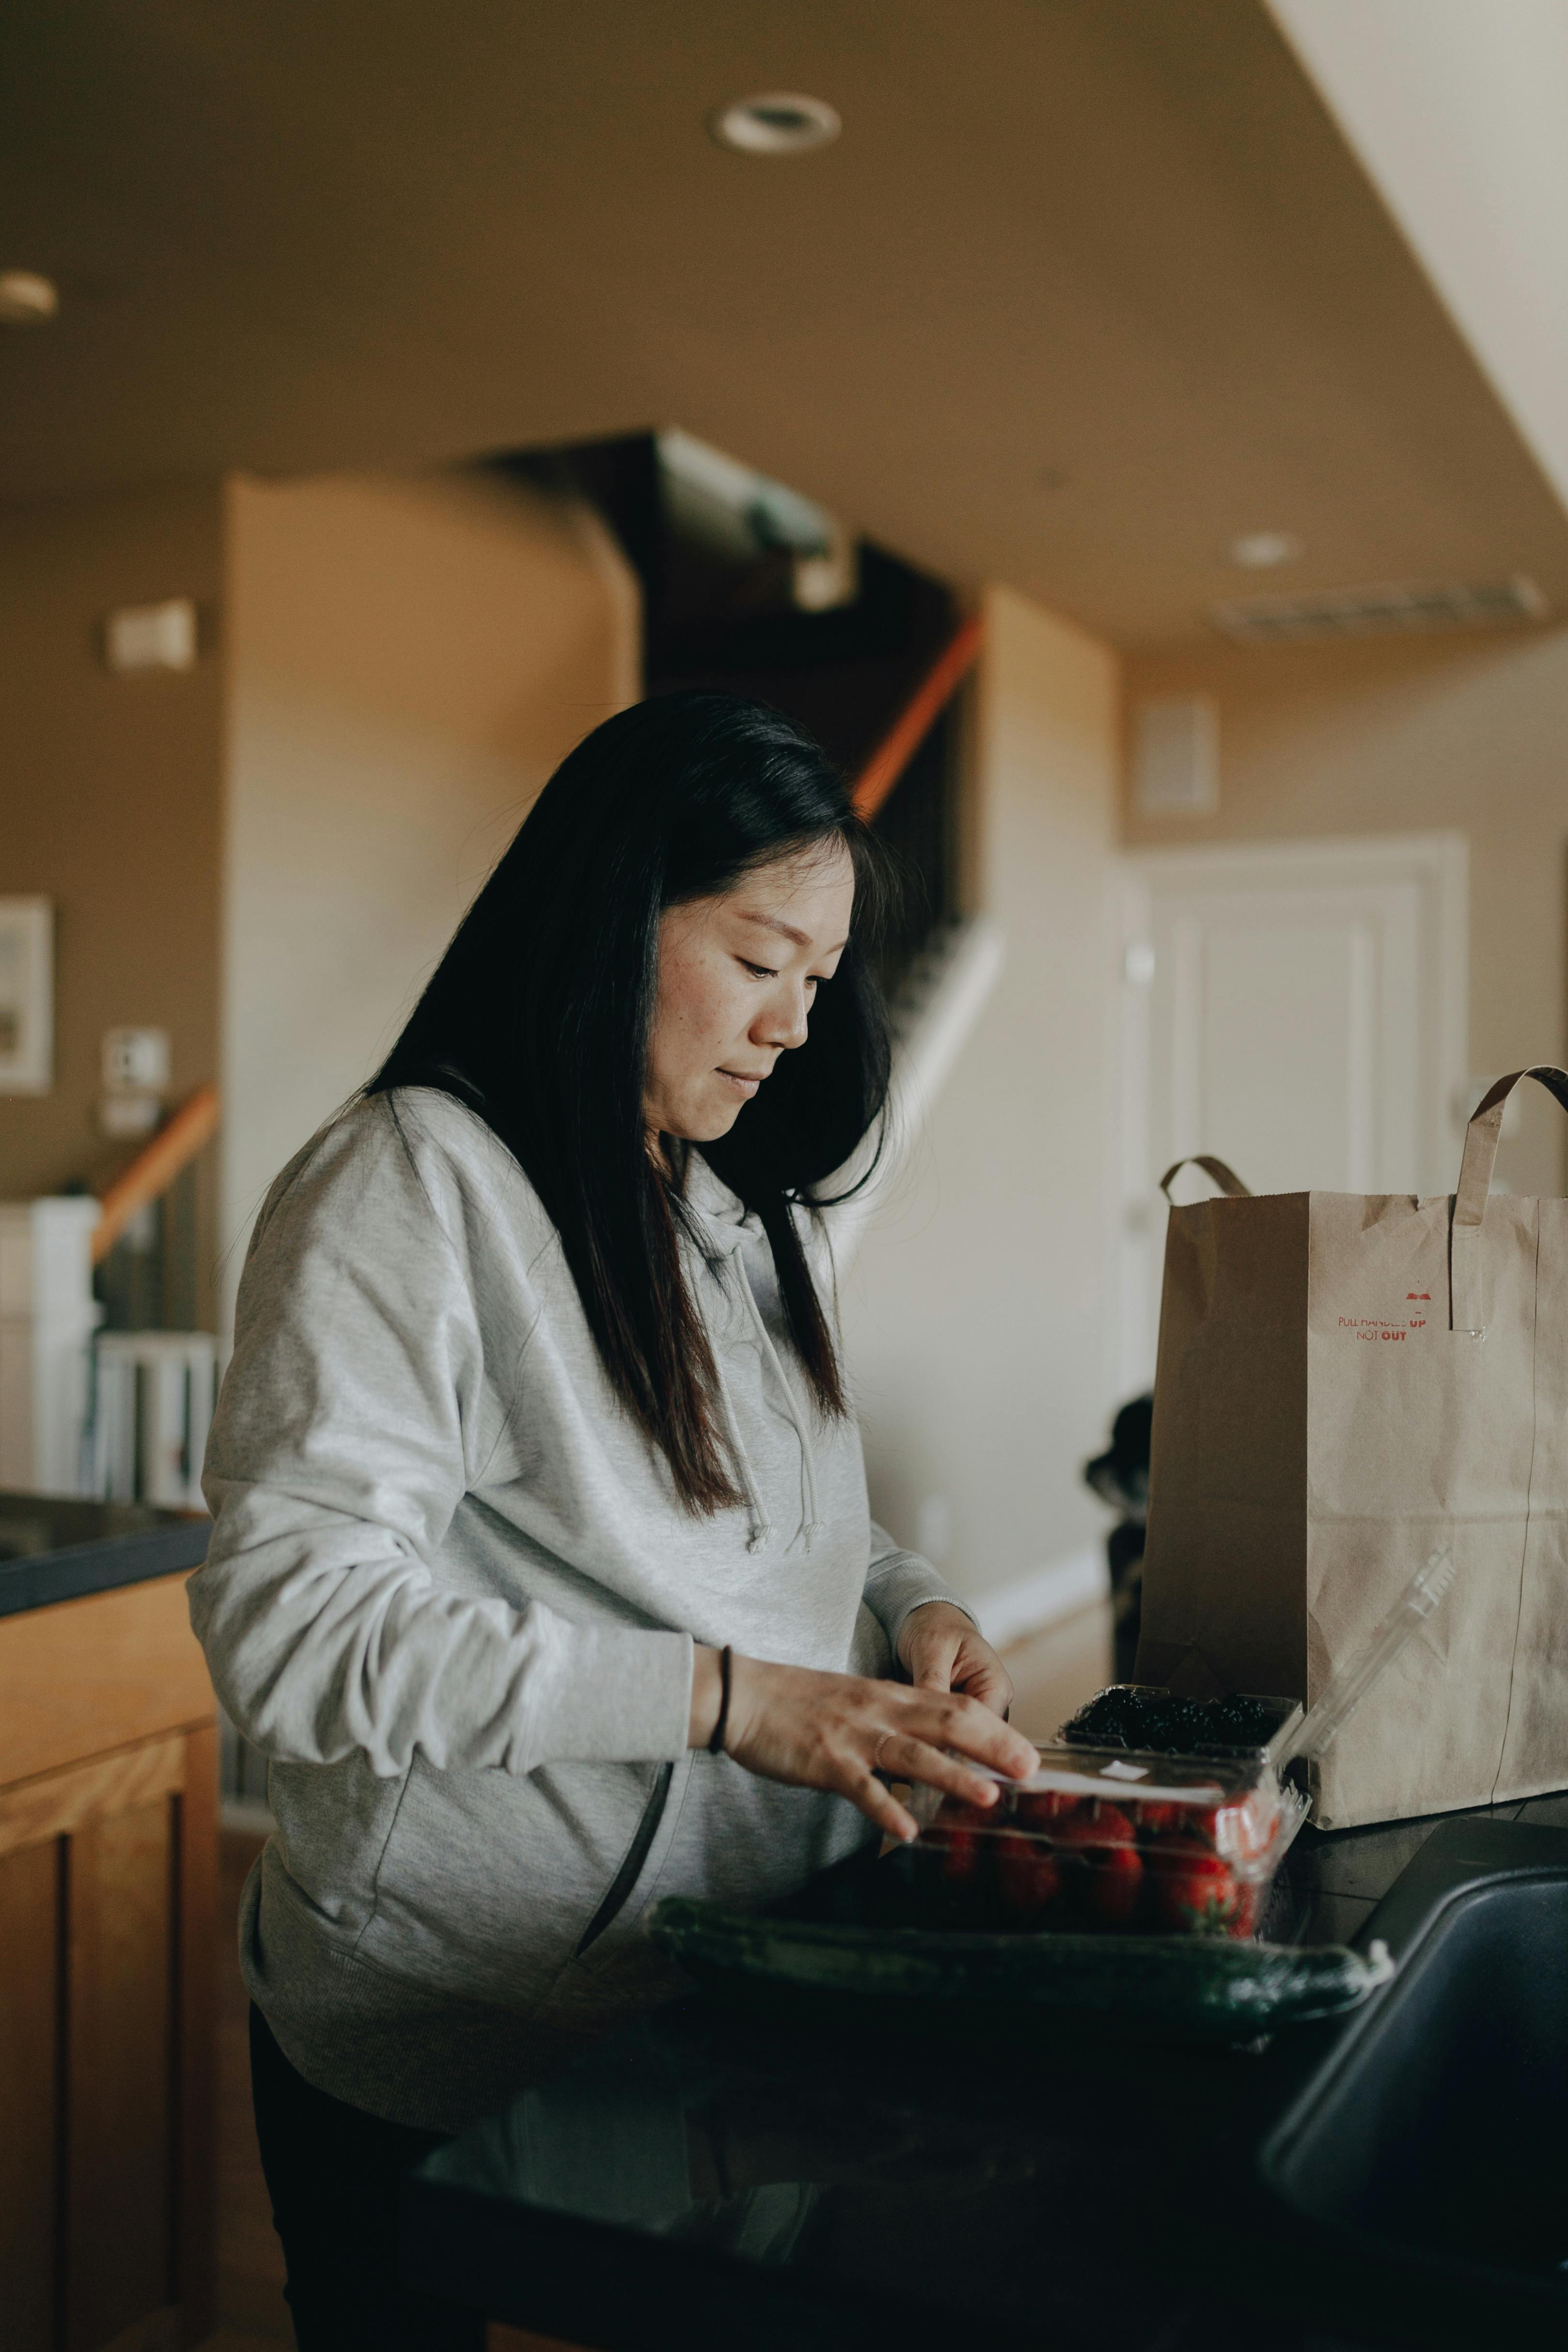 Jennifer unpacks her groceries, finally at peace | Source: Pexels